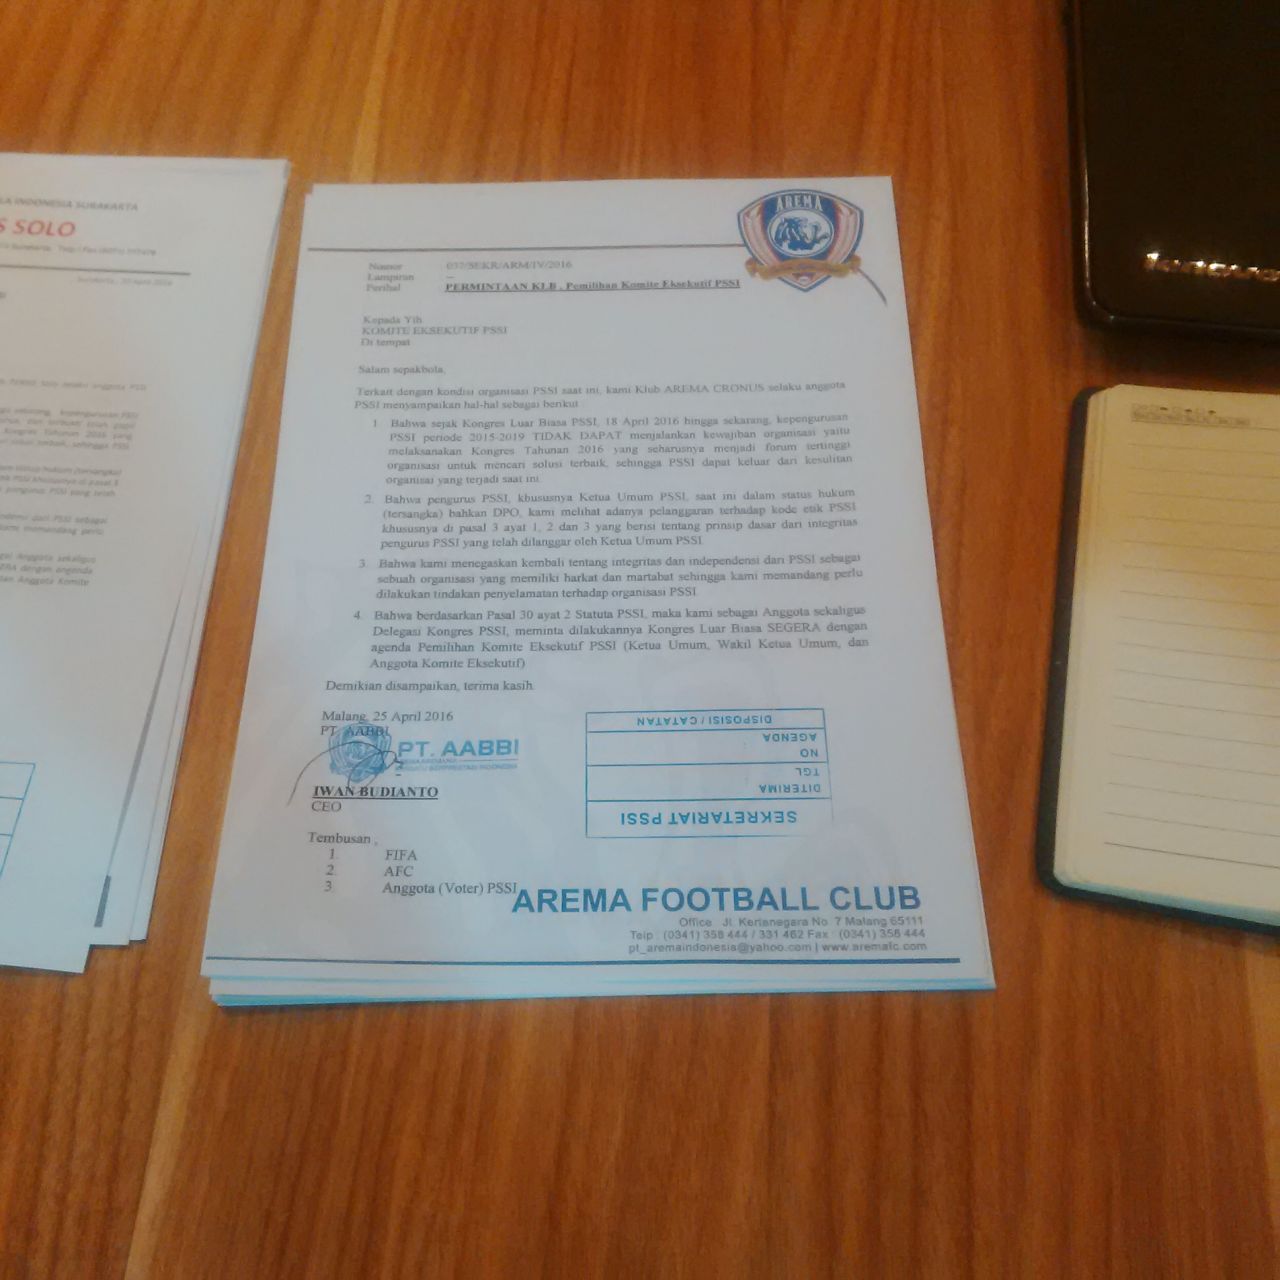 Salinan surat permintaan KLB untuk mengganti La Nyalla yang diteken CEO Arema Football Club Iwan Budianto. Foto: Mahmud Alexander/Rappler